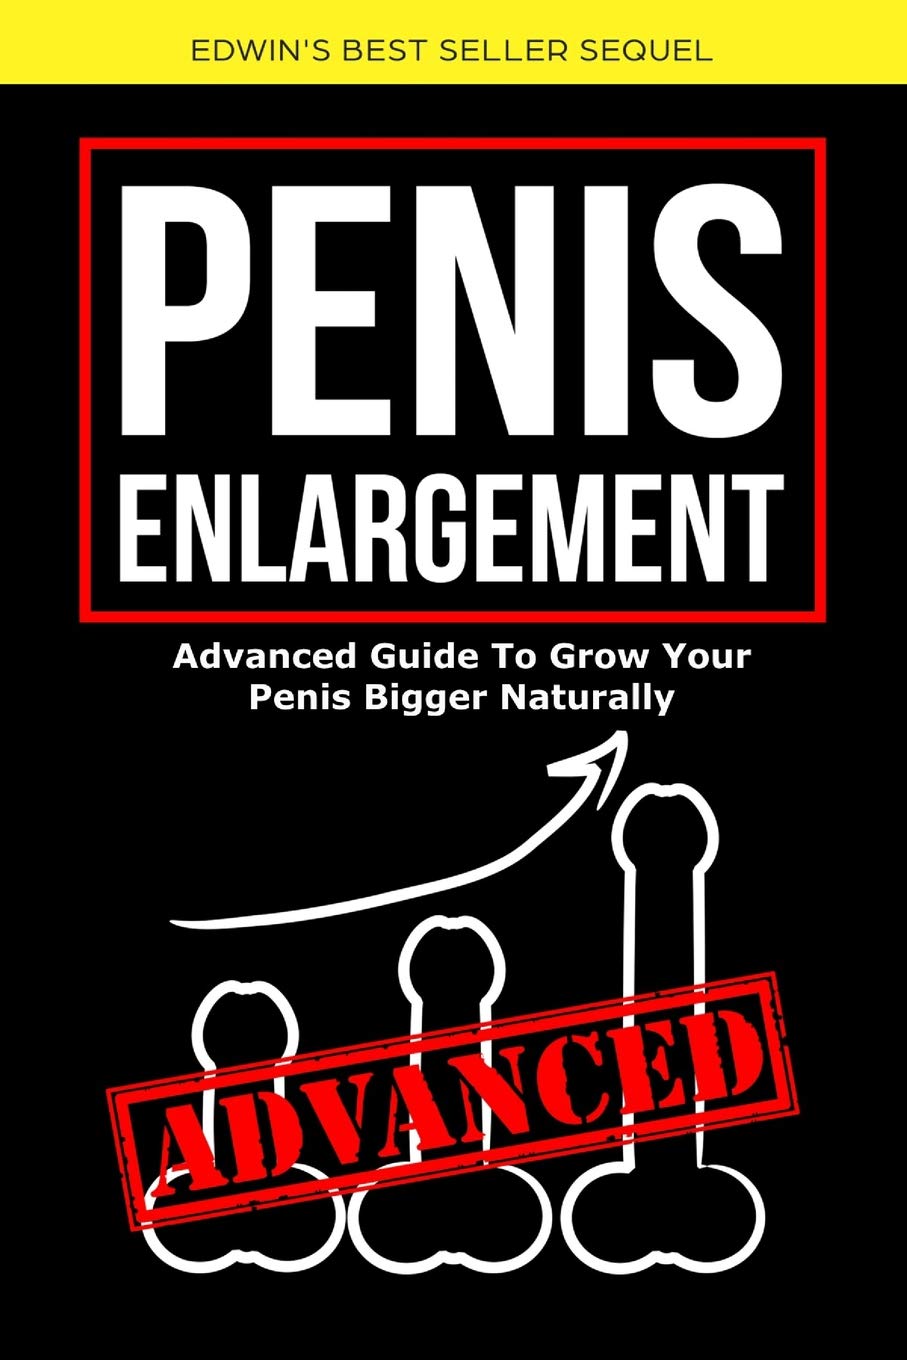 Free trial penis enlargement